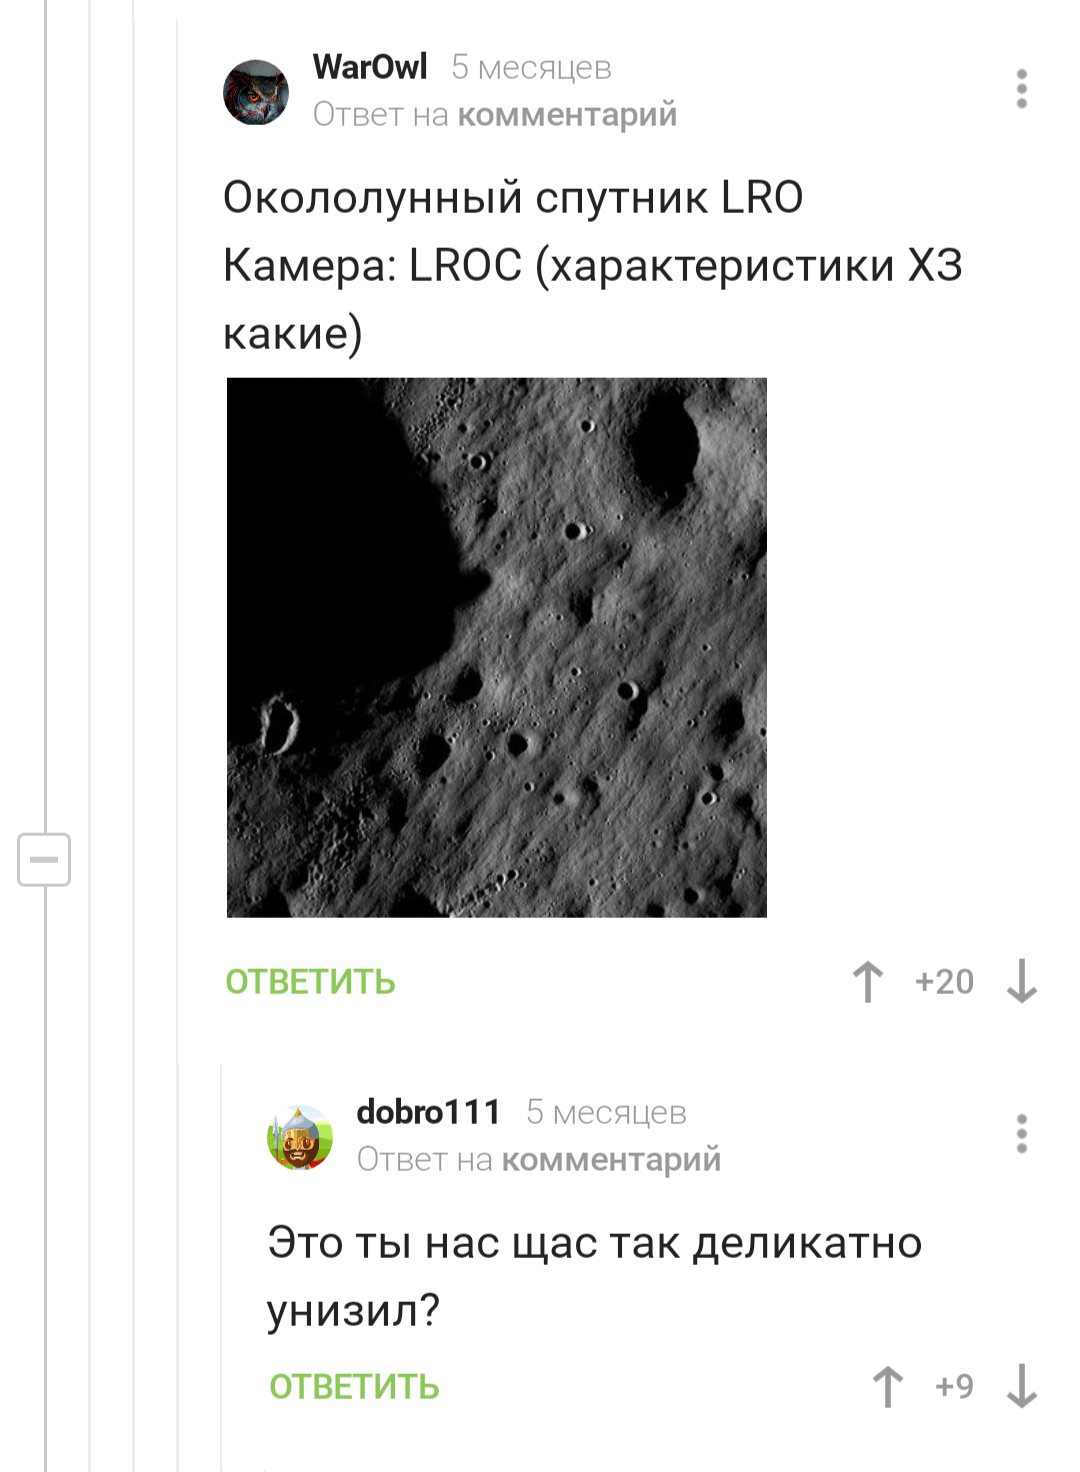 moon - moon, Comments on Peekaboo, The photo, Longpost, Screenshot